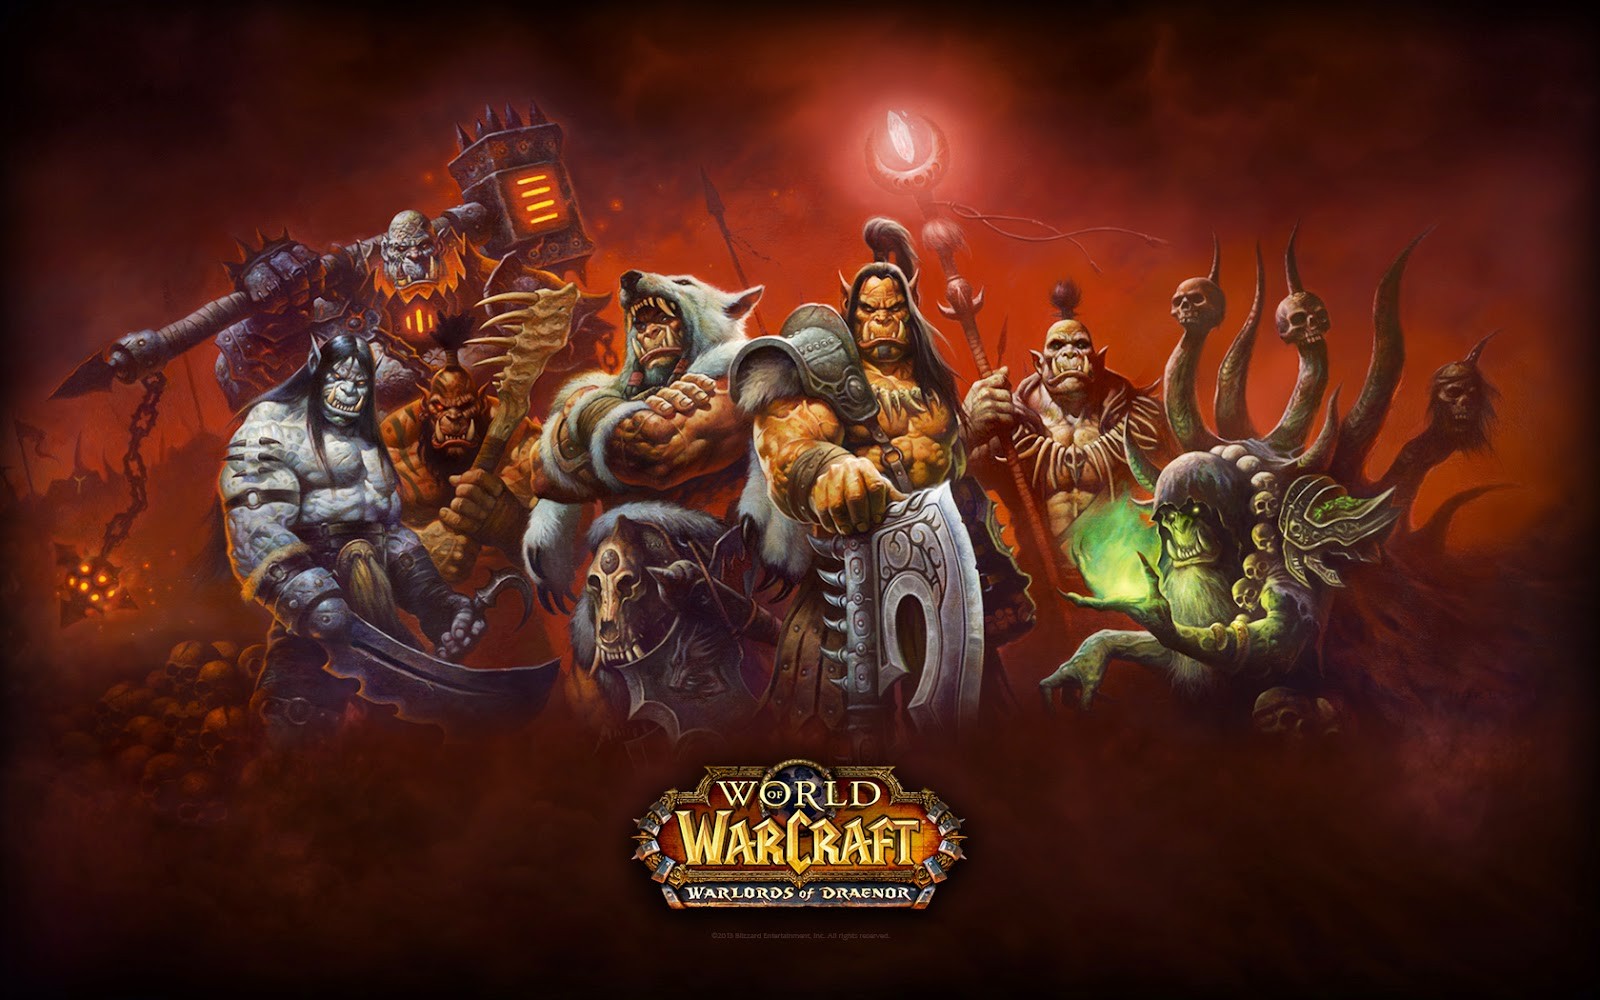 World of Warcraft's